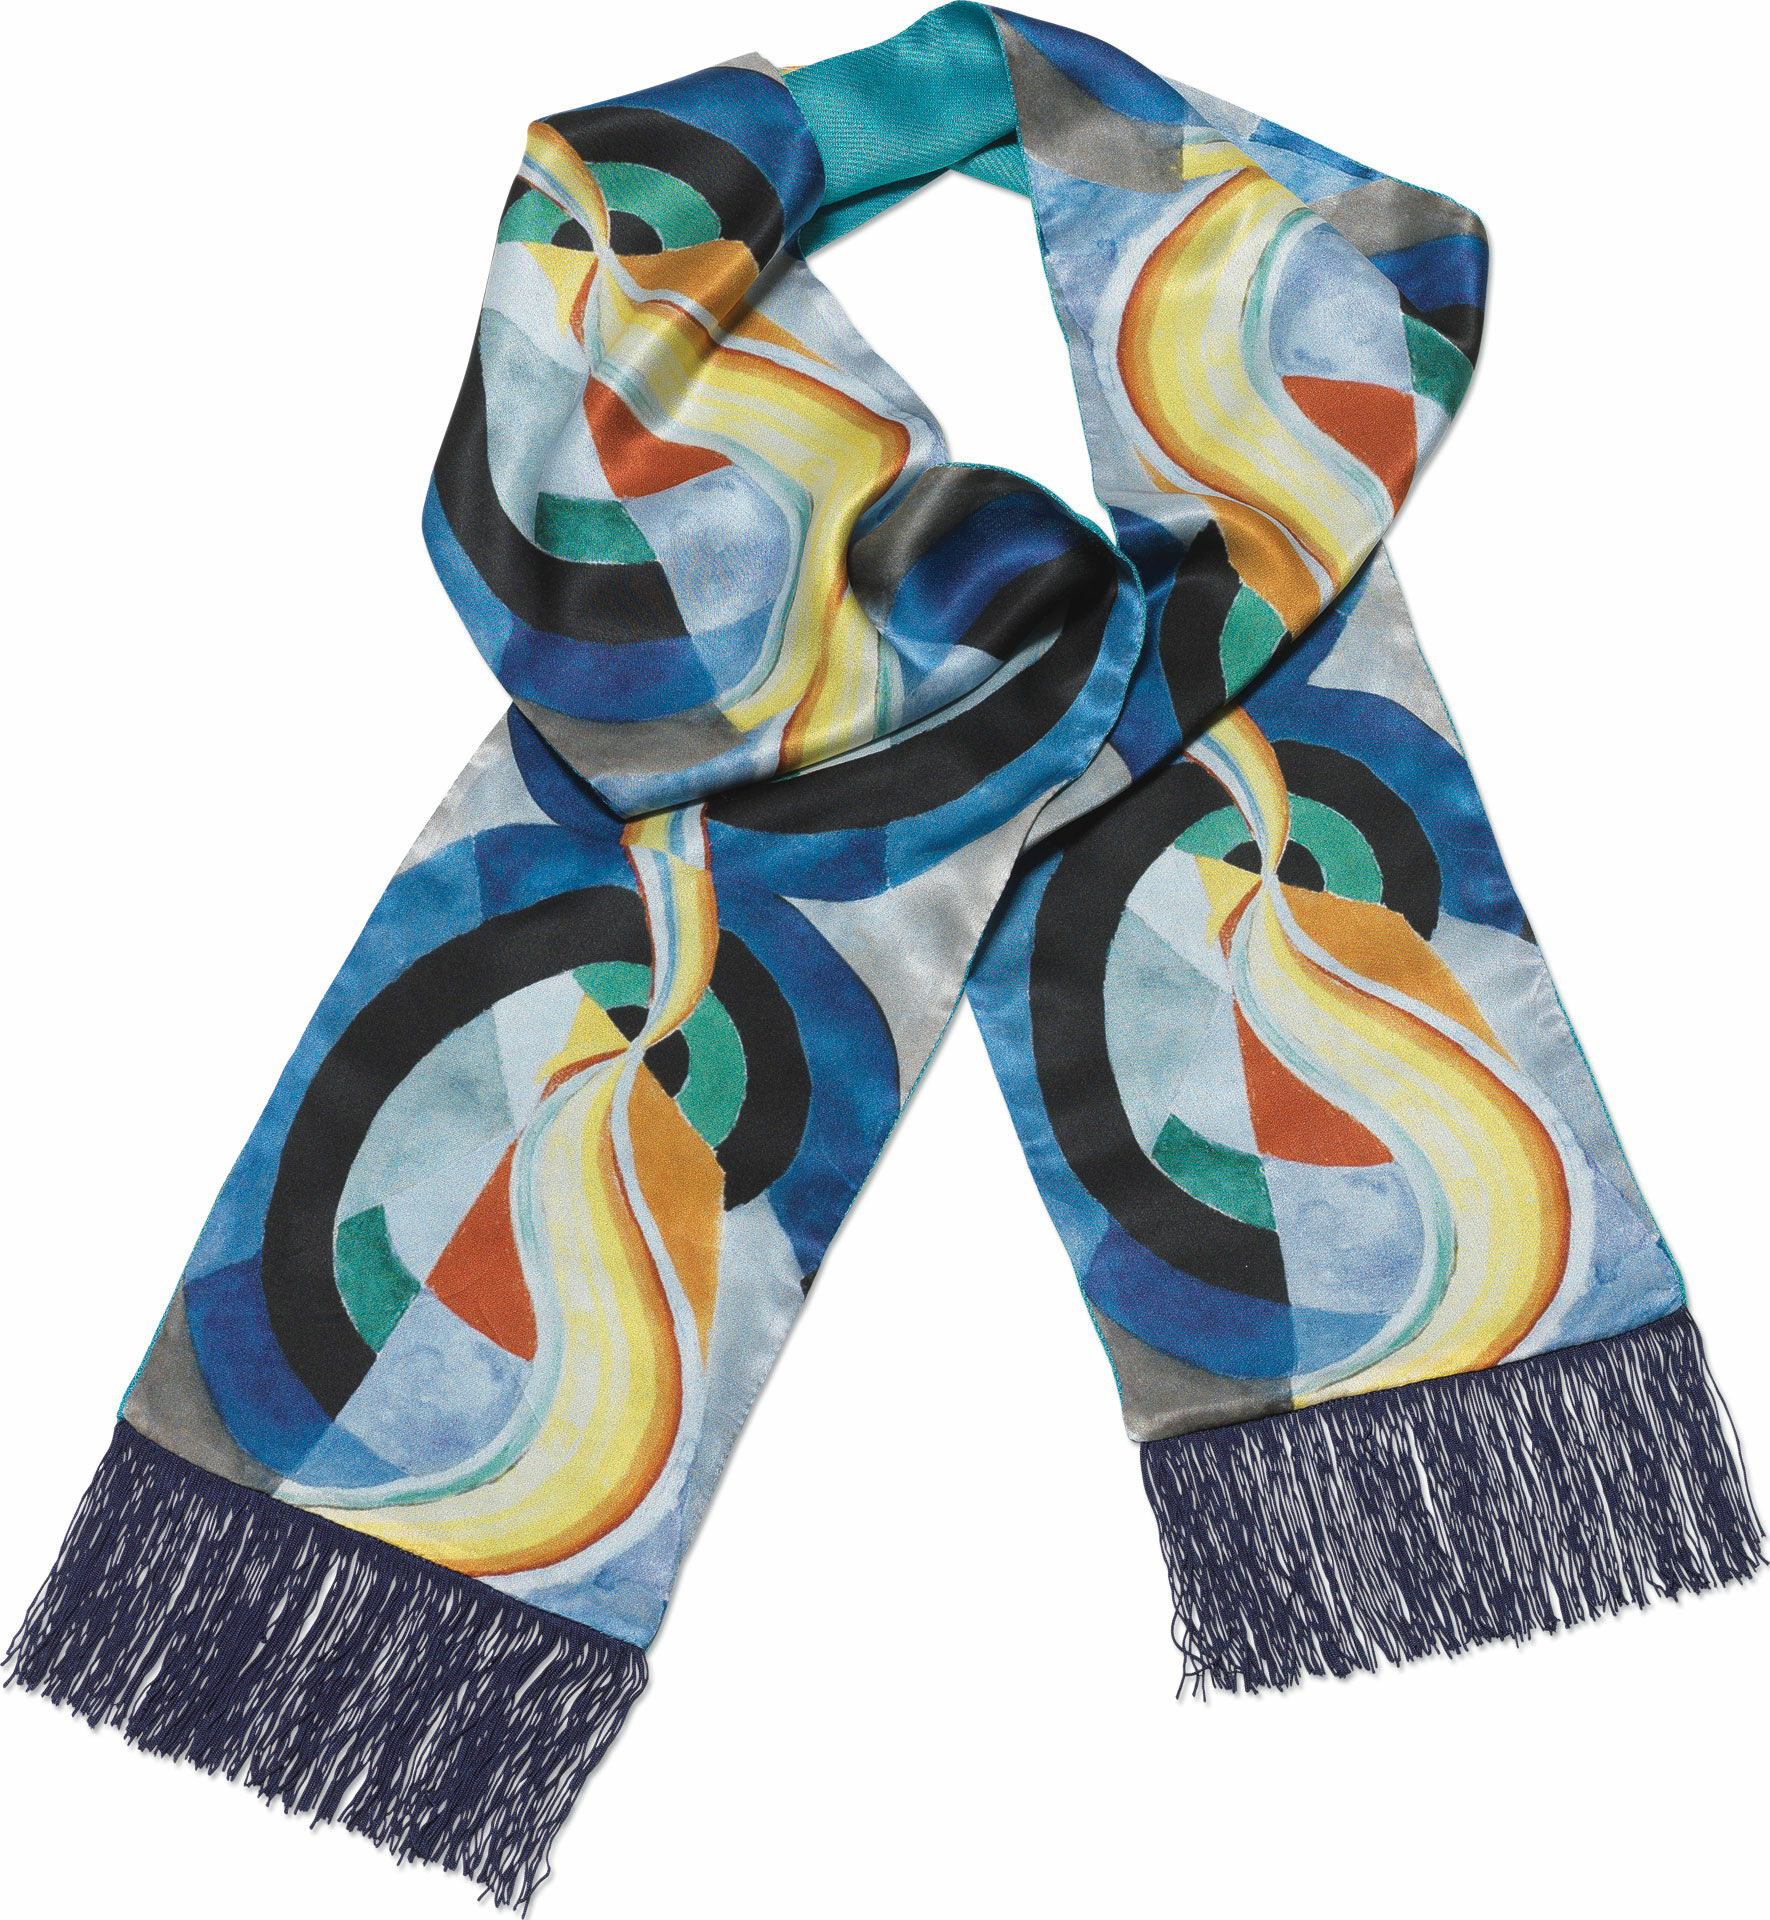 Silk scarf "Orpheus" by Robert Delaunay